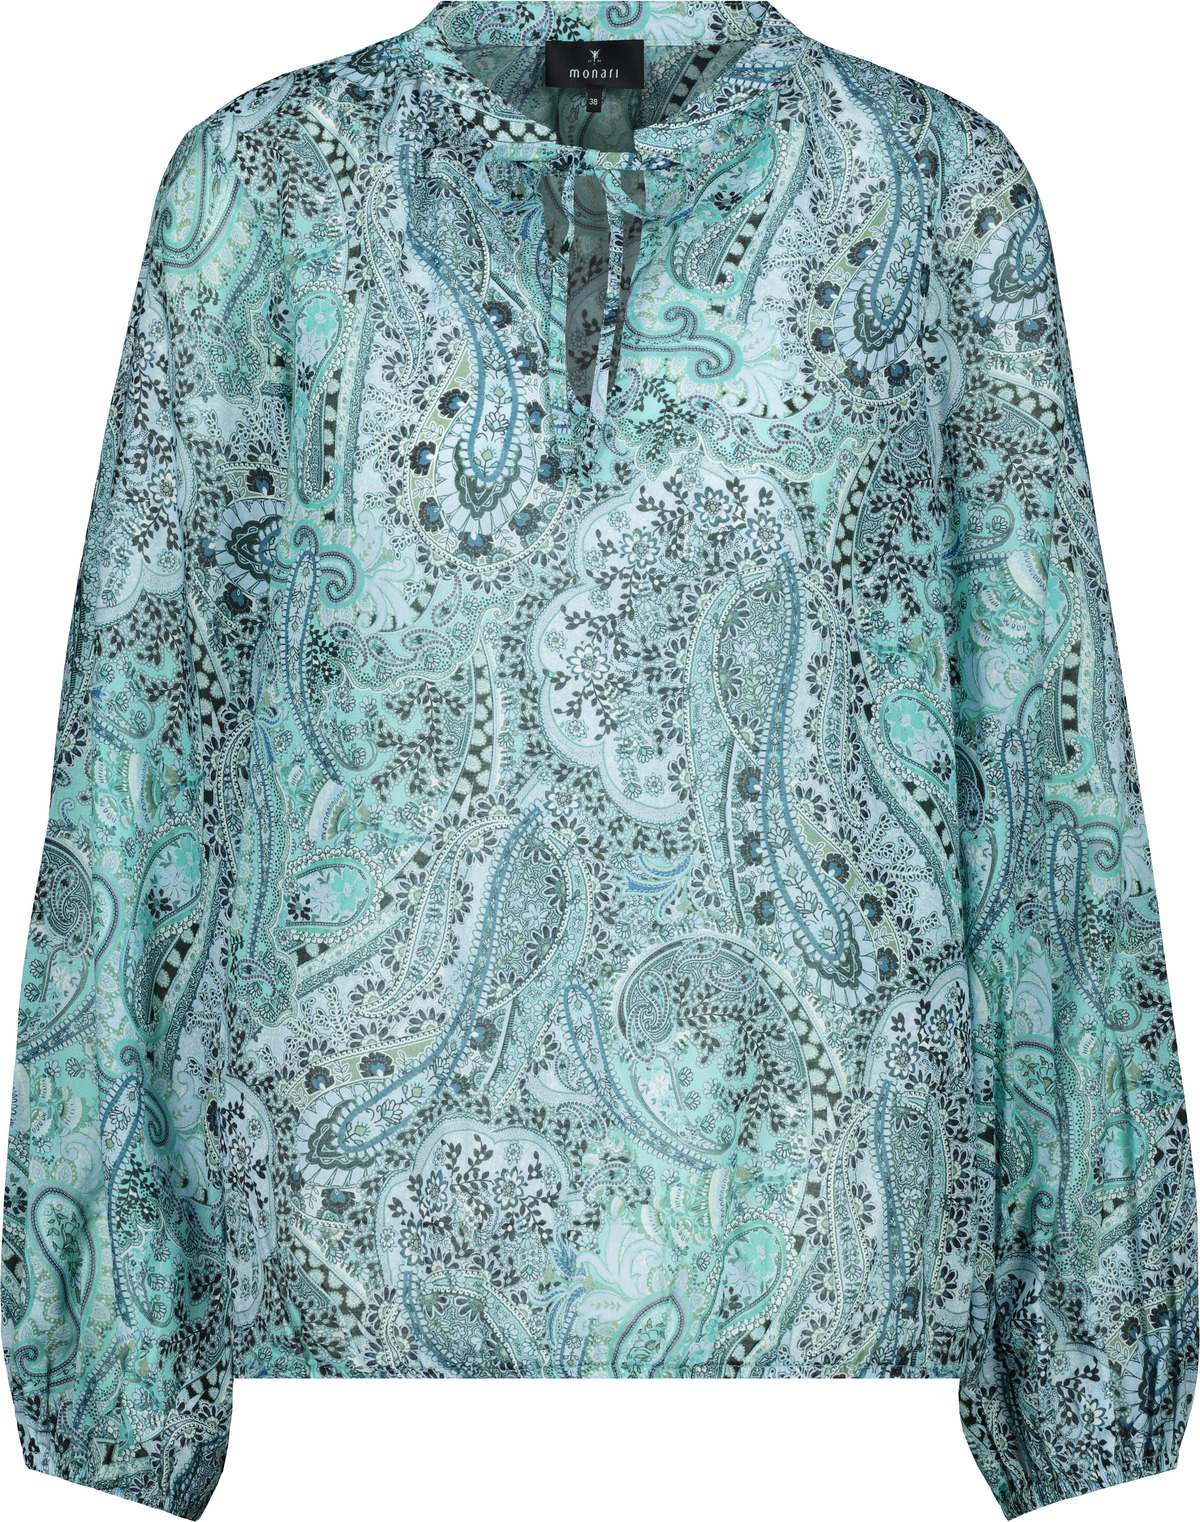 Gummizug, Monari Paisley Hartmann gemustert Mode Muster fresh Bluse mit - mint Shop